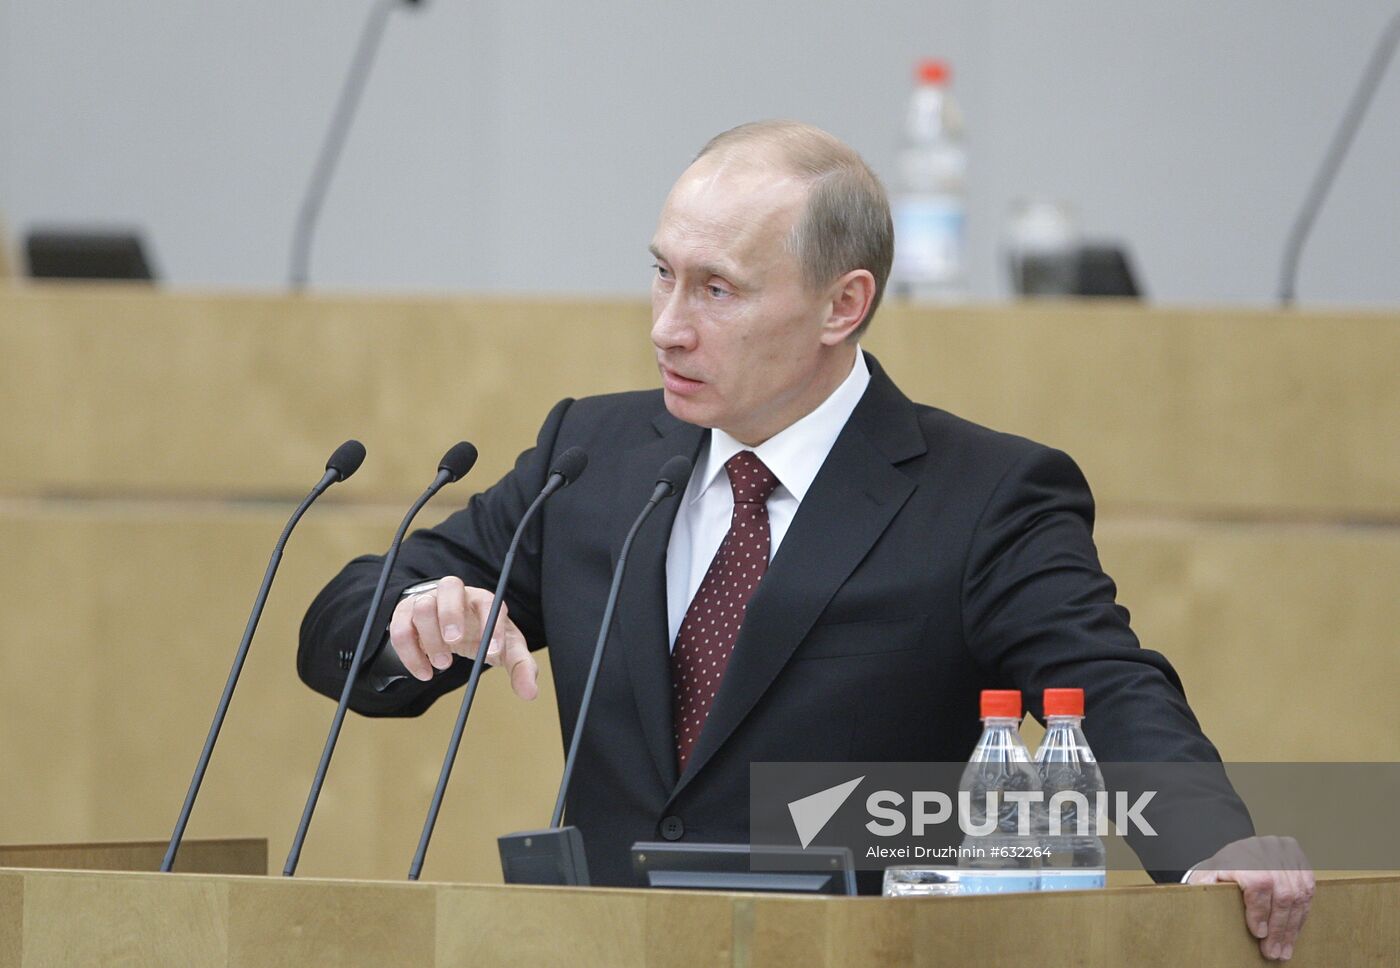 Russian Prime Minister Vladimir Putin at Duma meeting